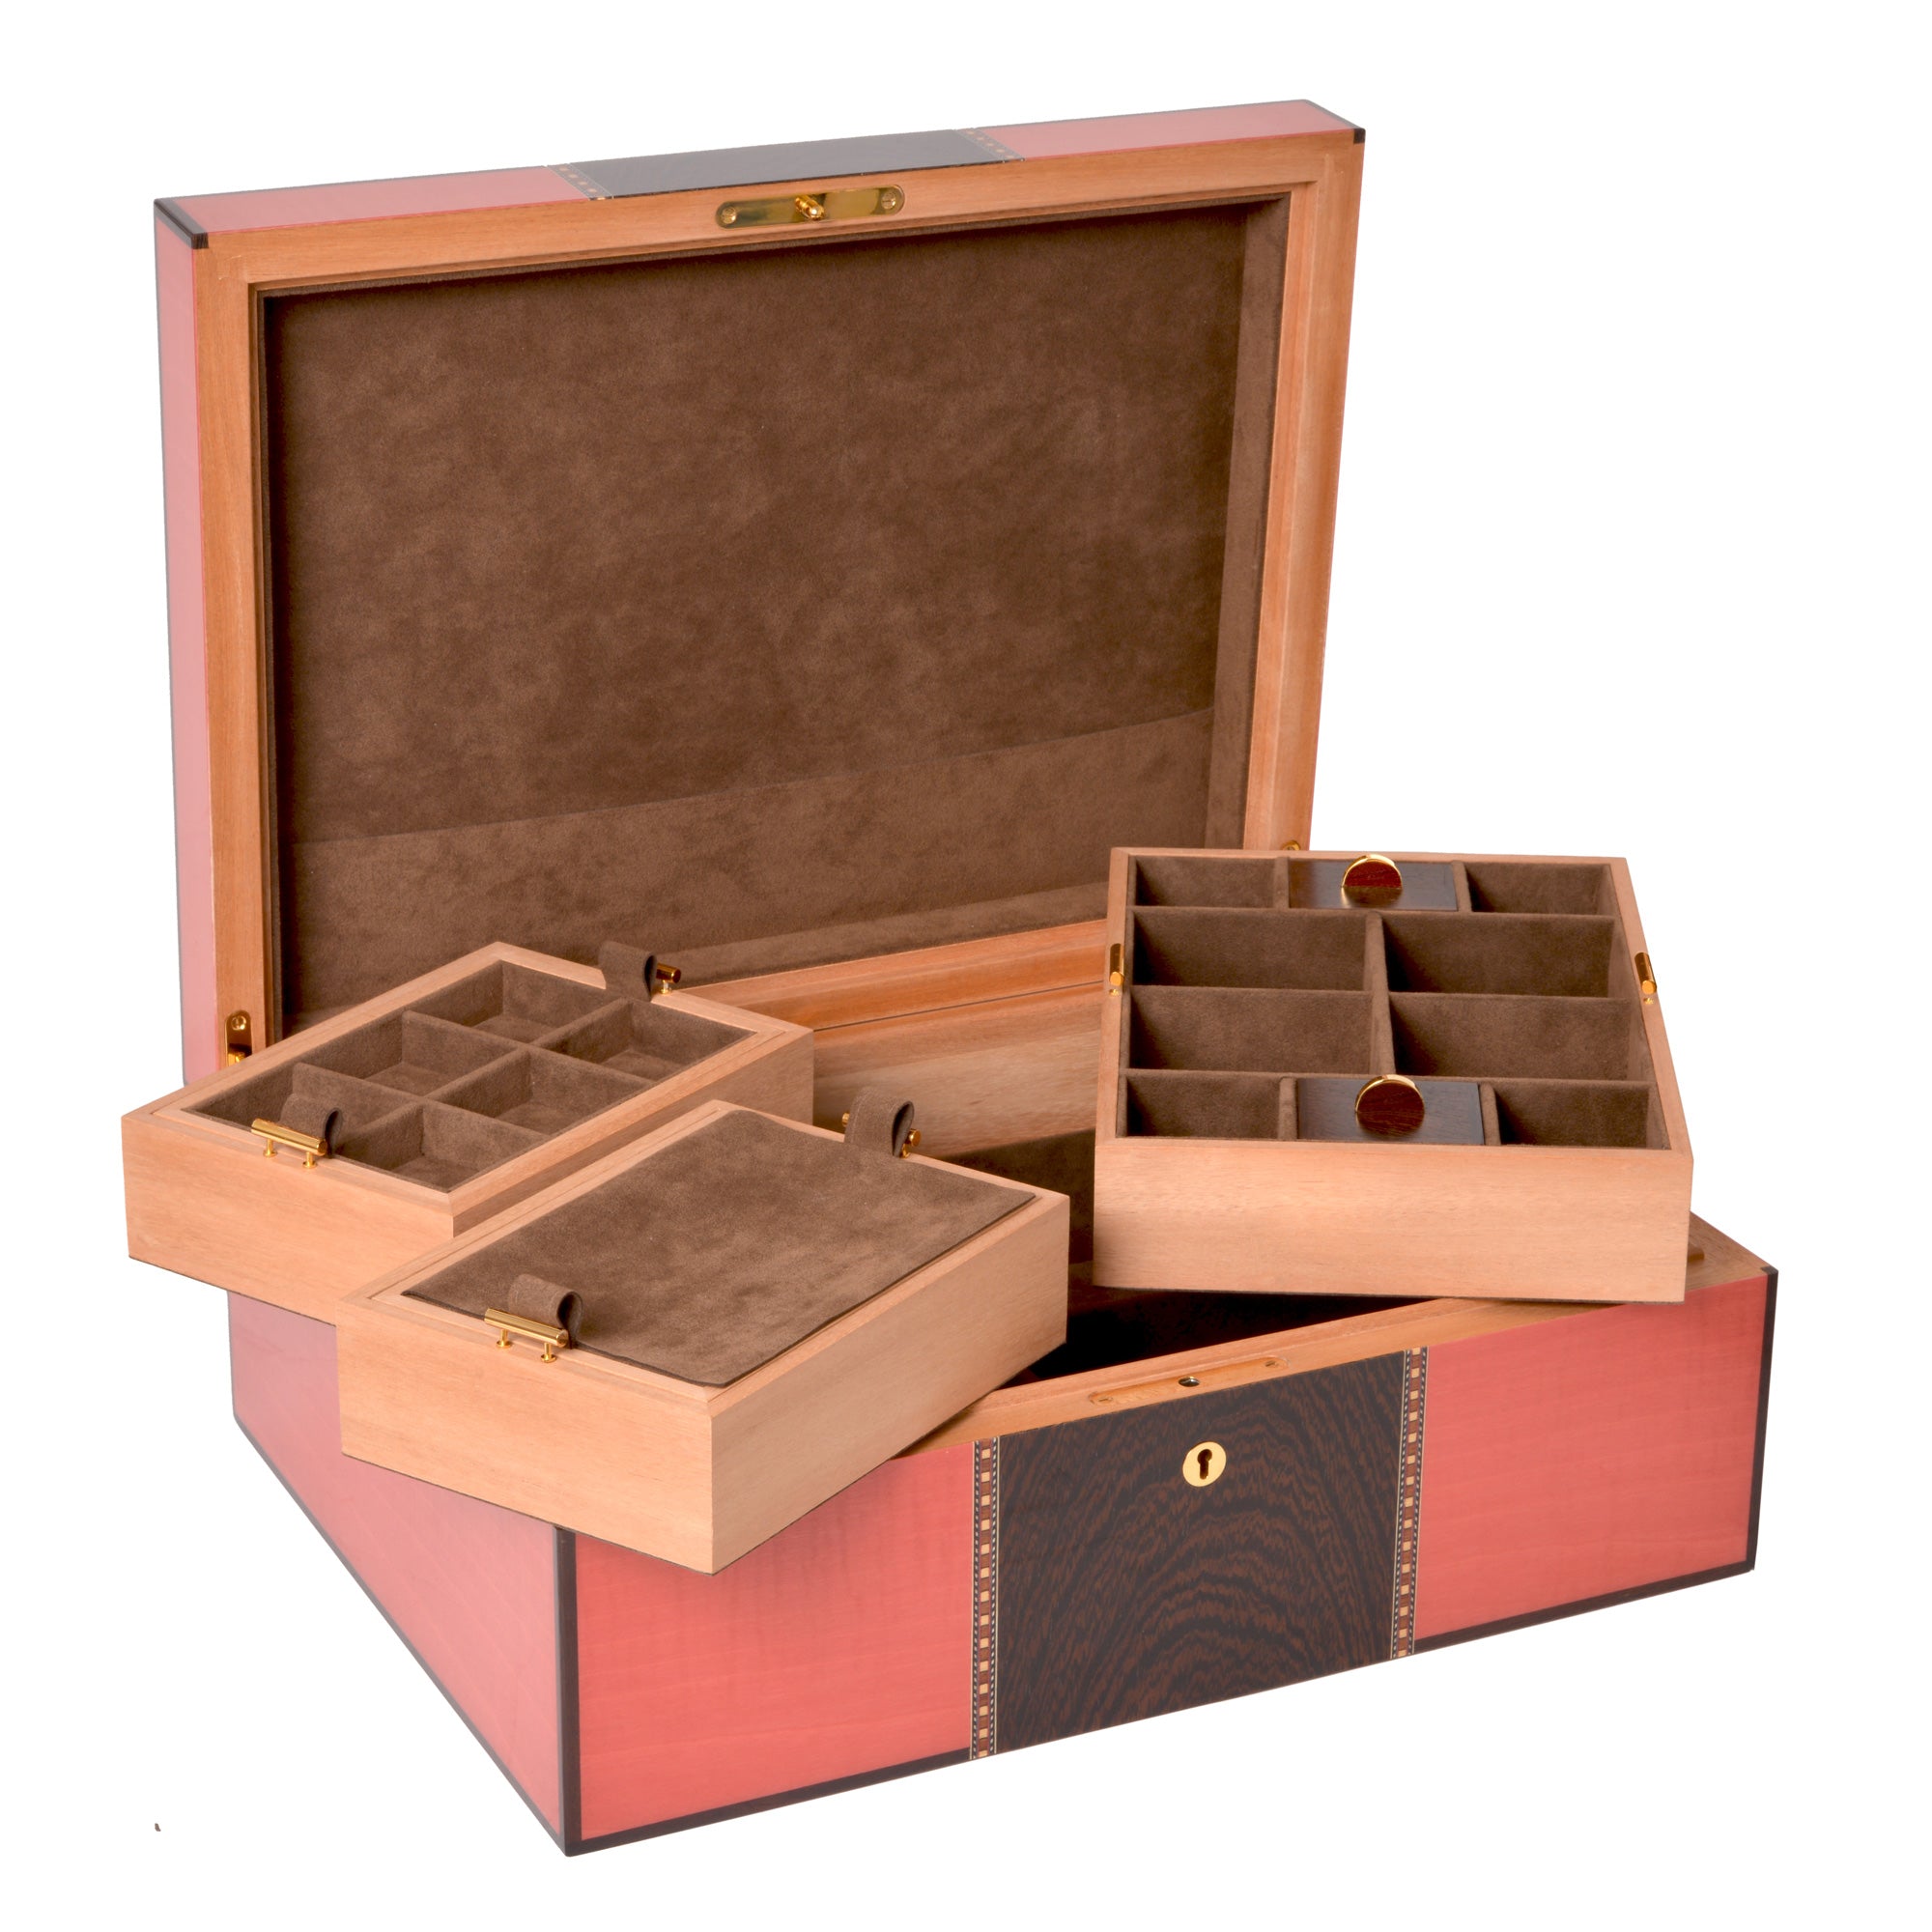 "Vista" - Old pink jewelry box - Large size